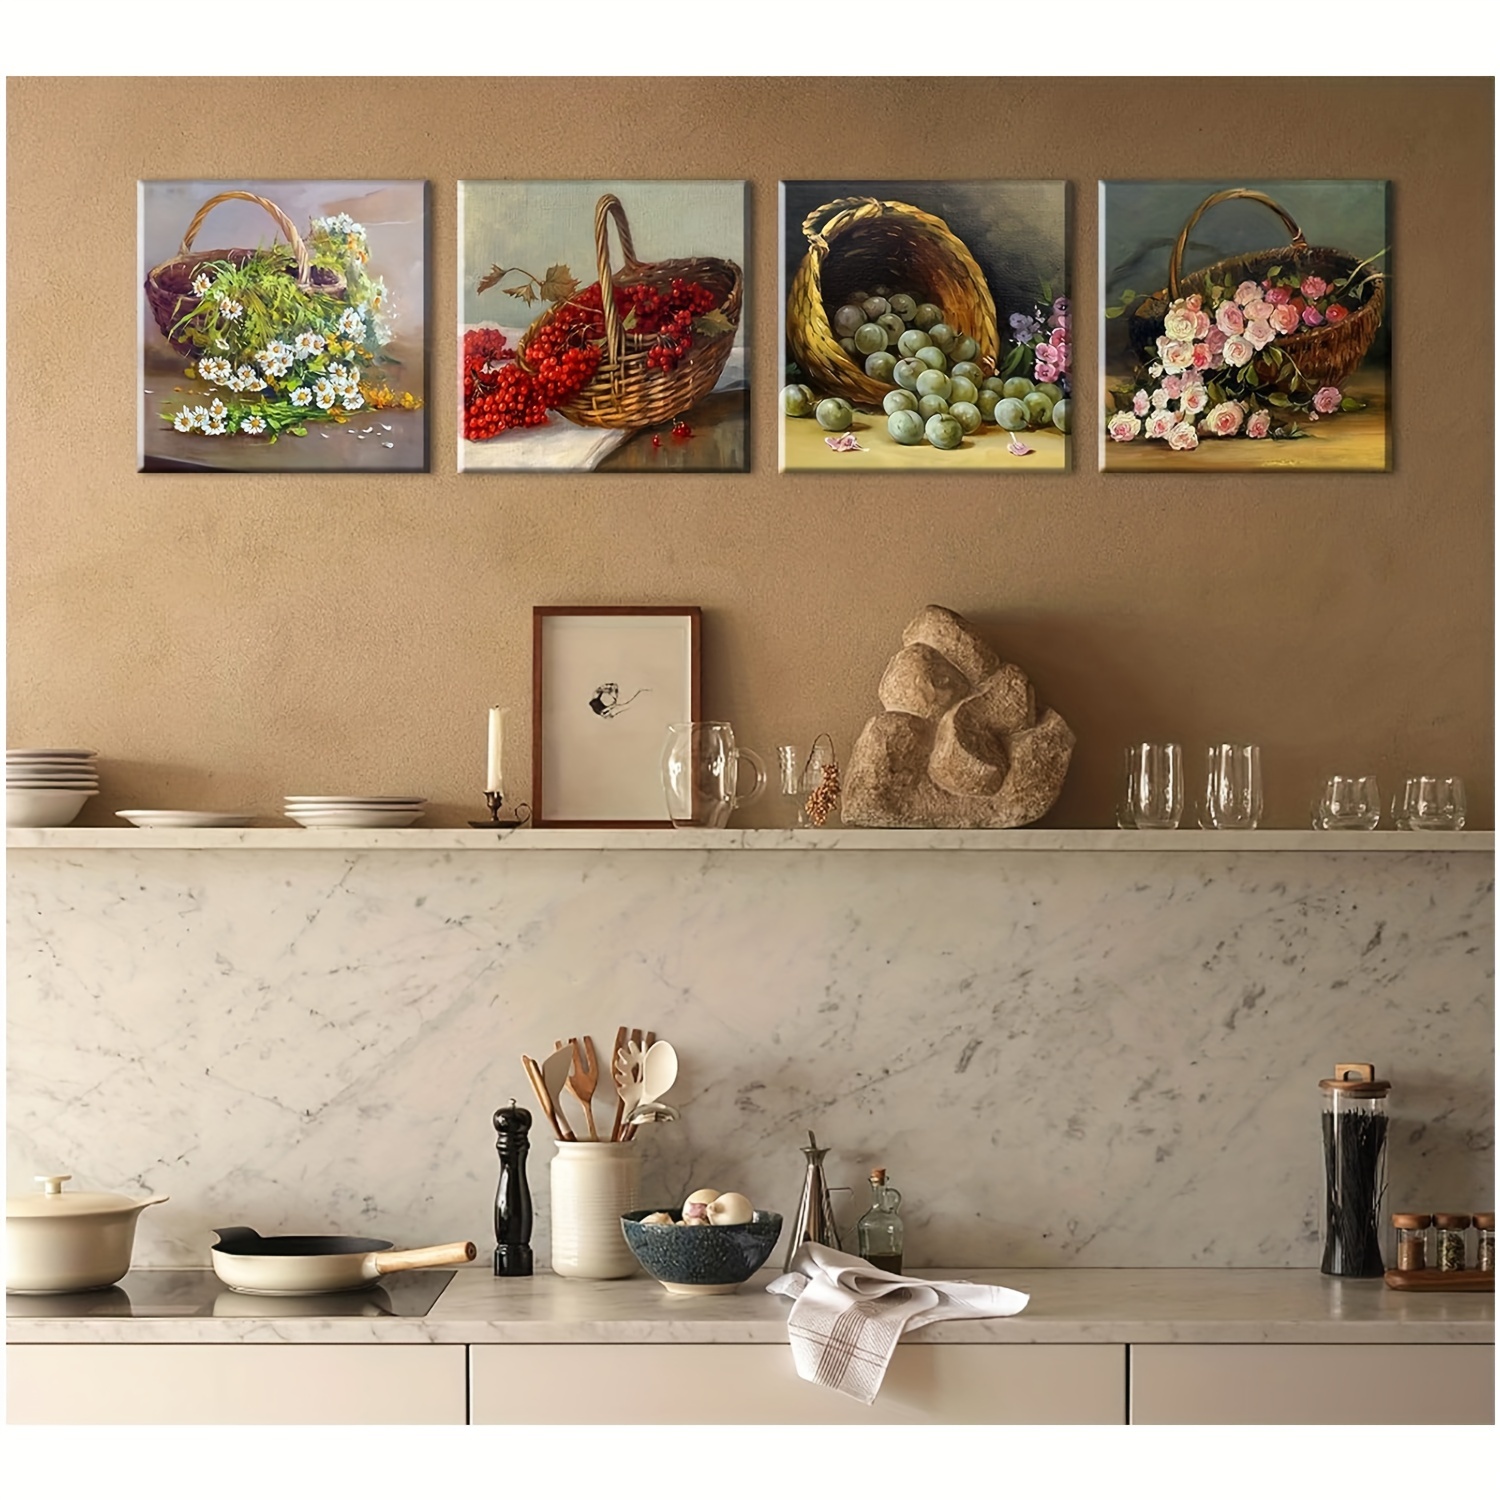  Arte de pared de cocina rústica, cuadros de cocina de